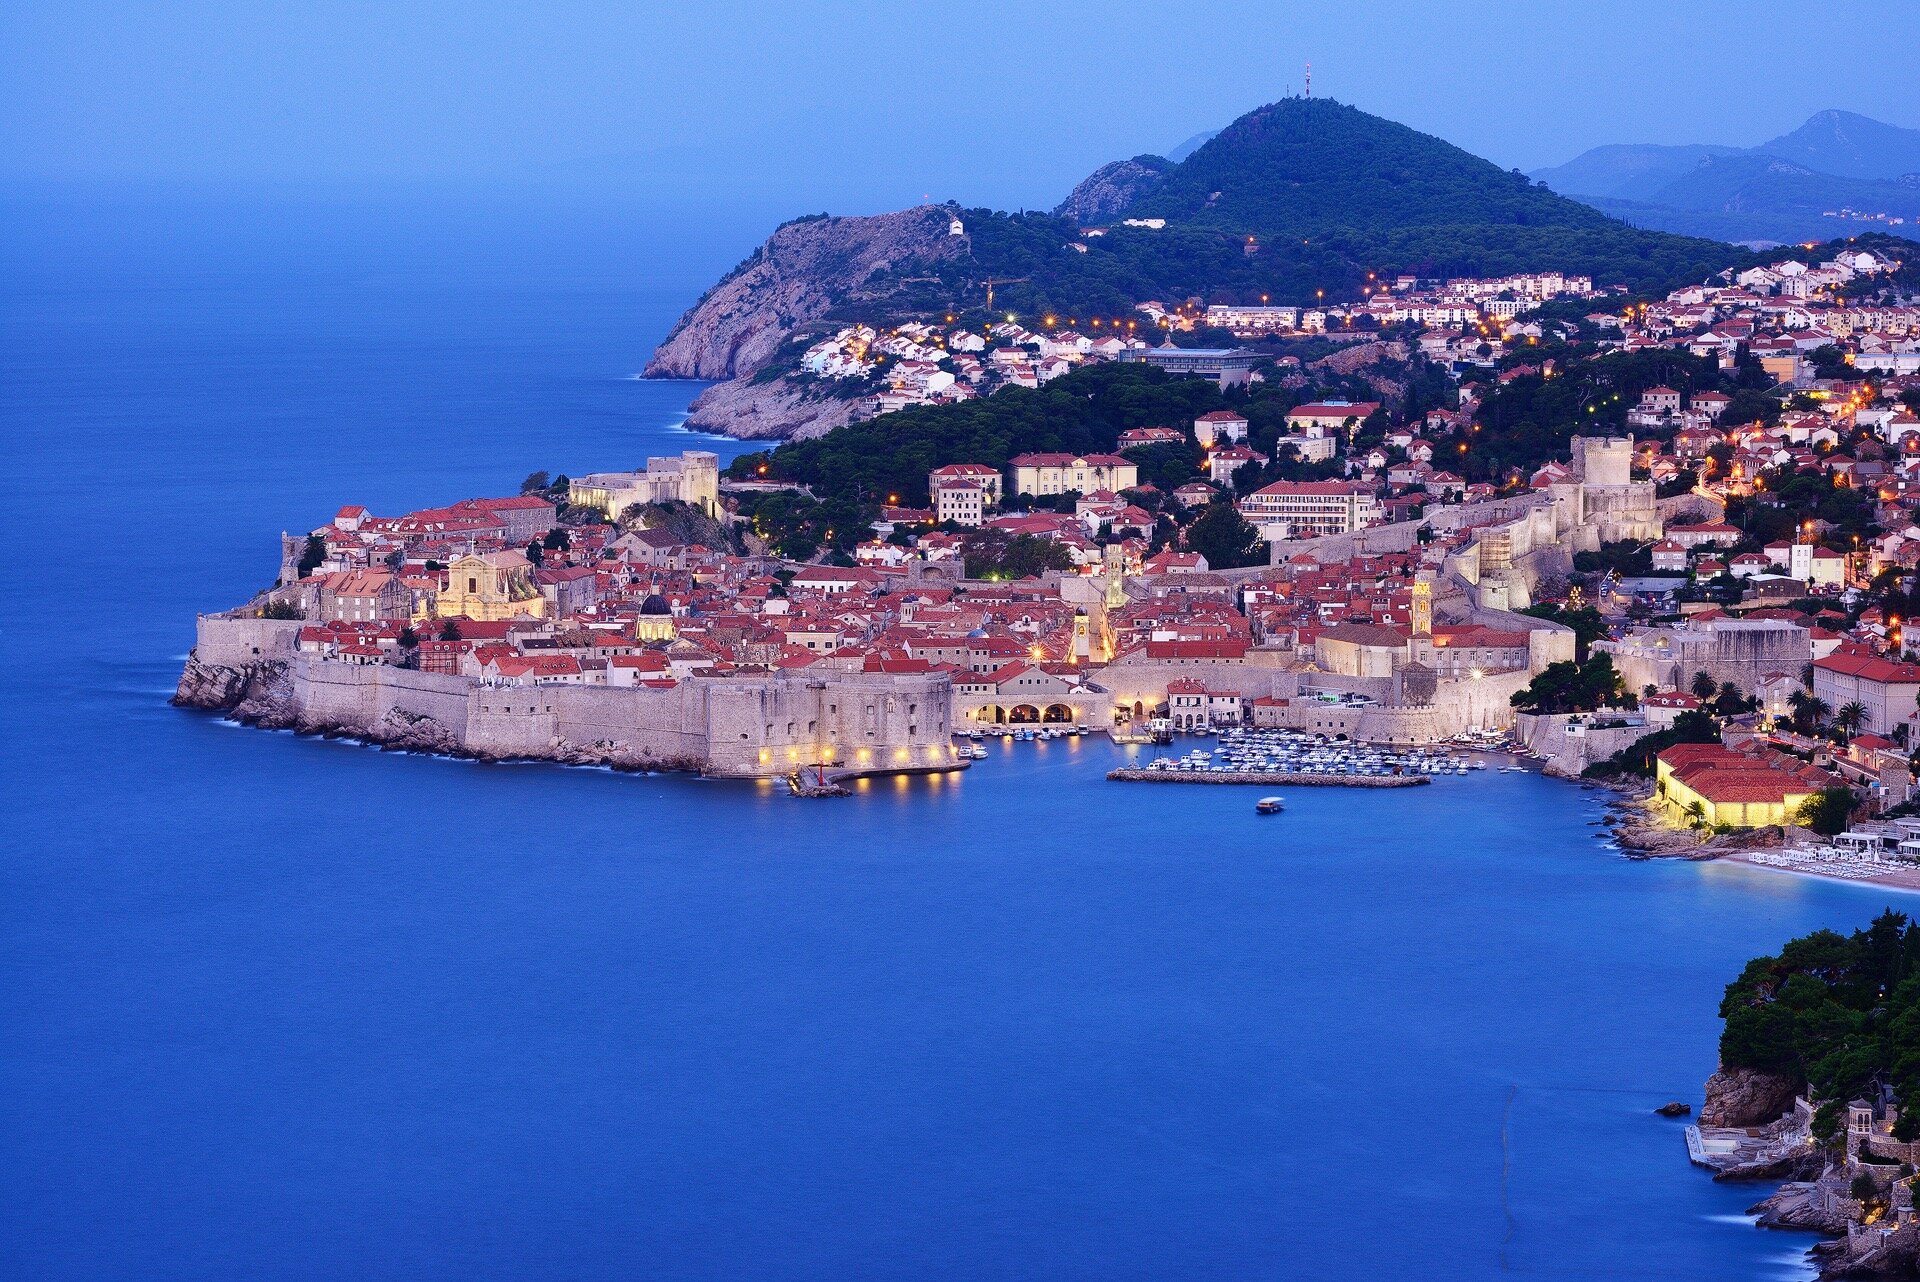 Evening in Dubrovnik